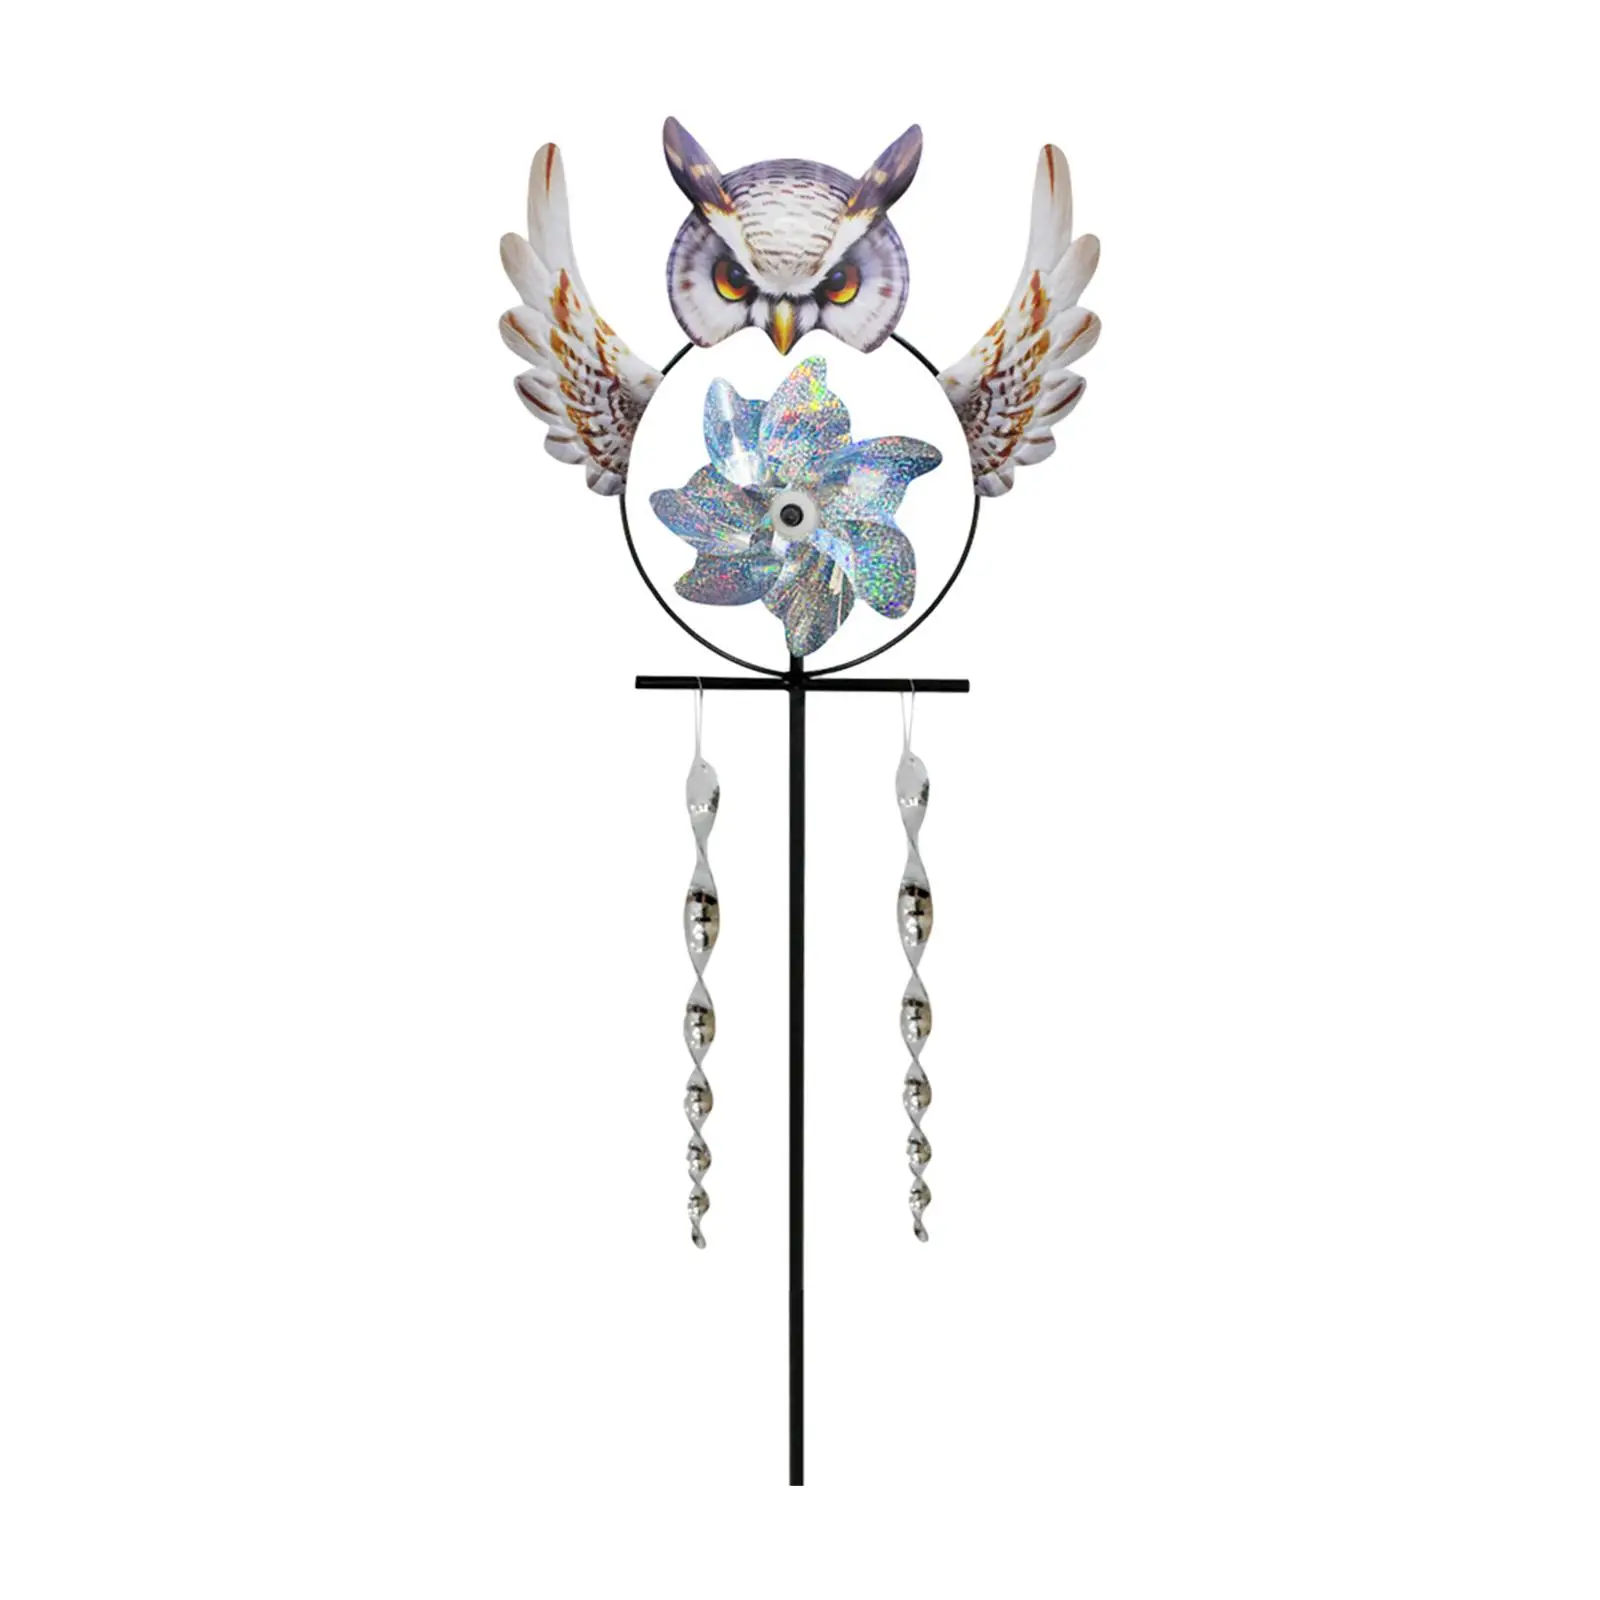 Yard Owl Figurine Wind Pinwheel with Stake Decorative Reflective 37inch Tall Wind Chime for Courtyard Versatile Stylish Sturdy